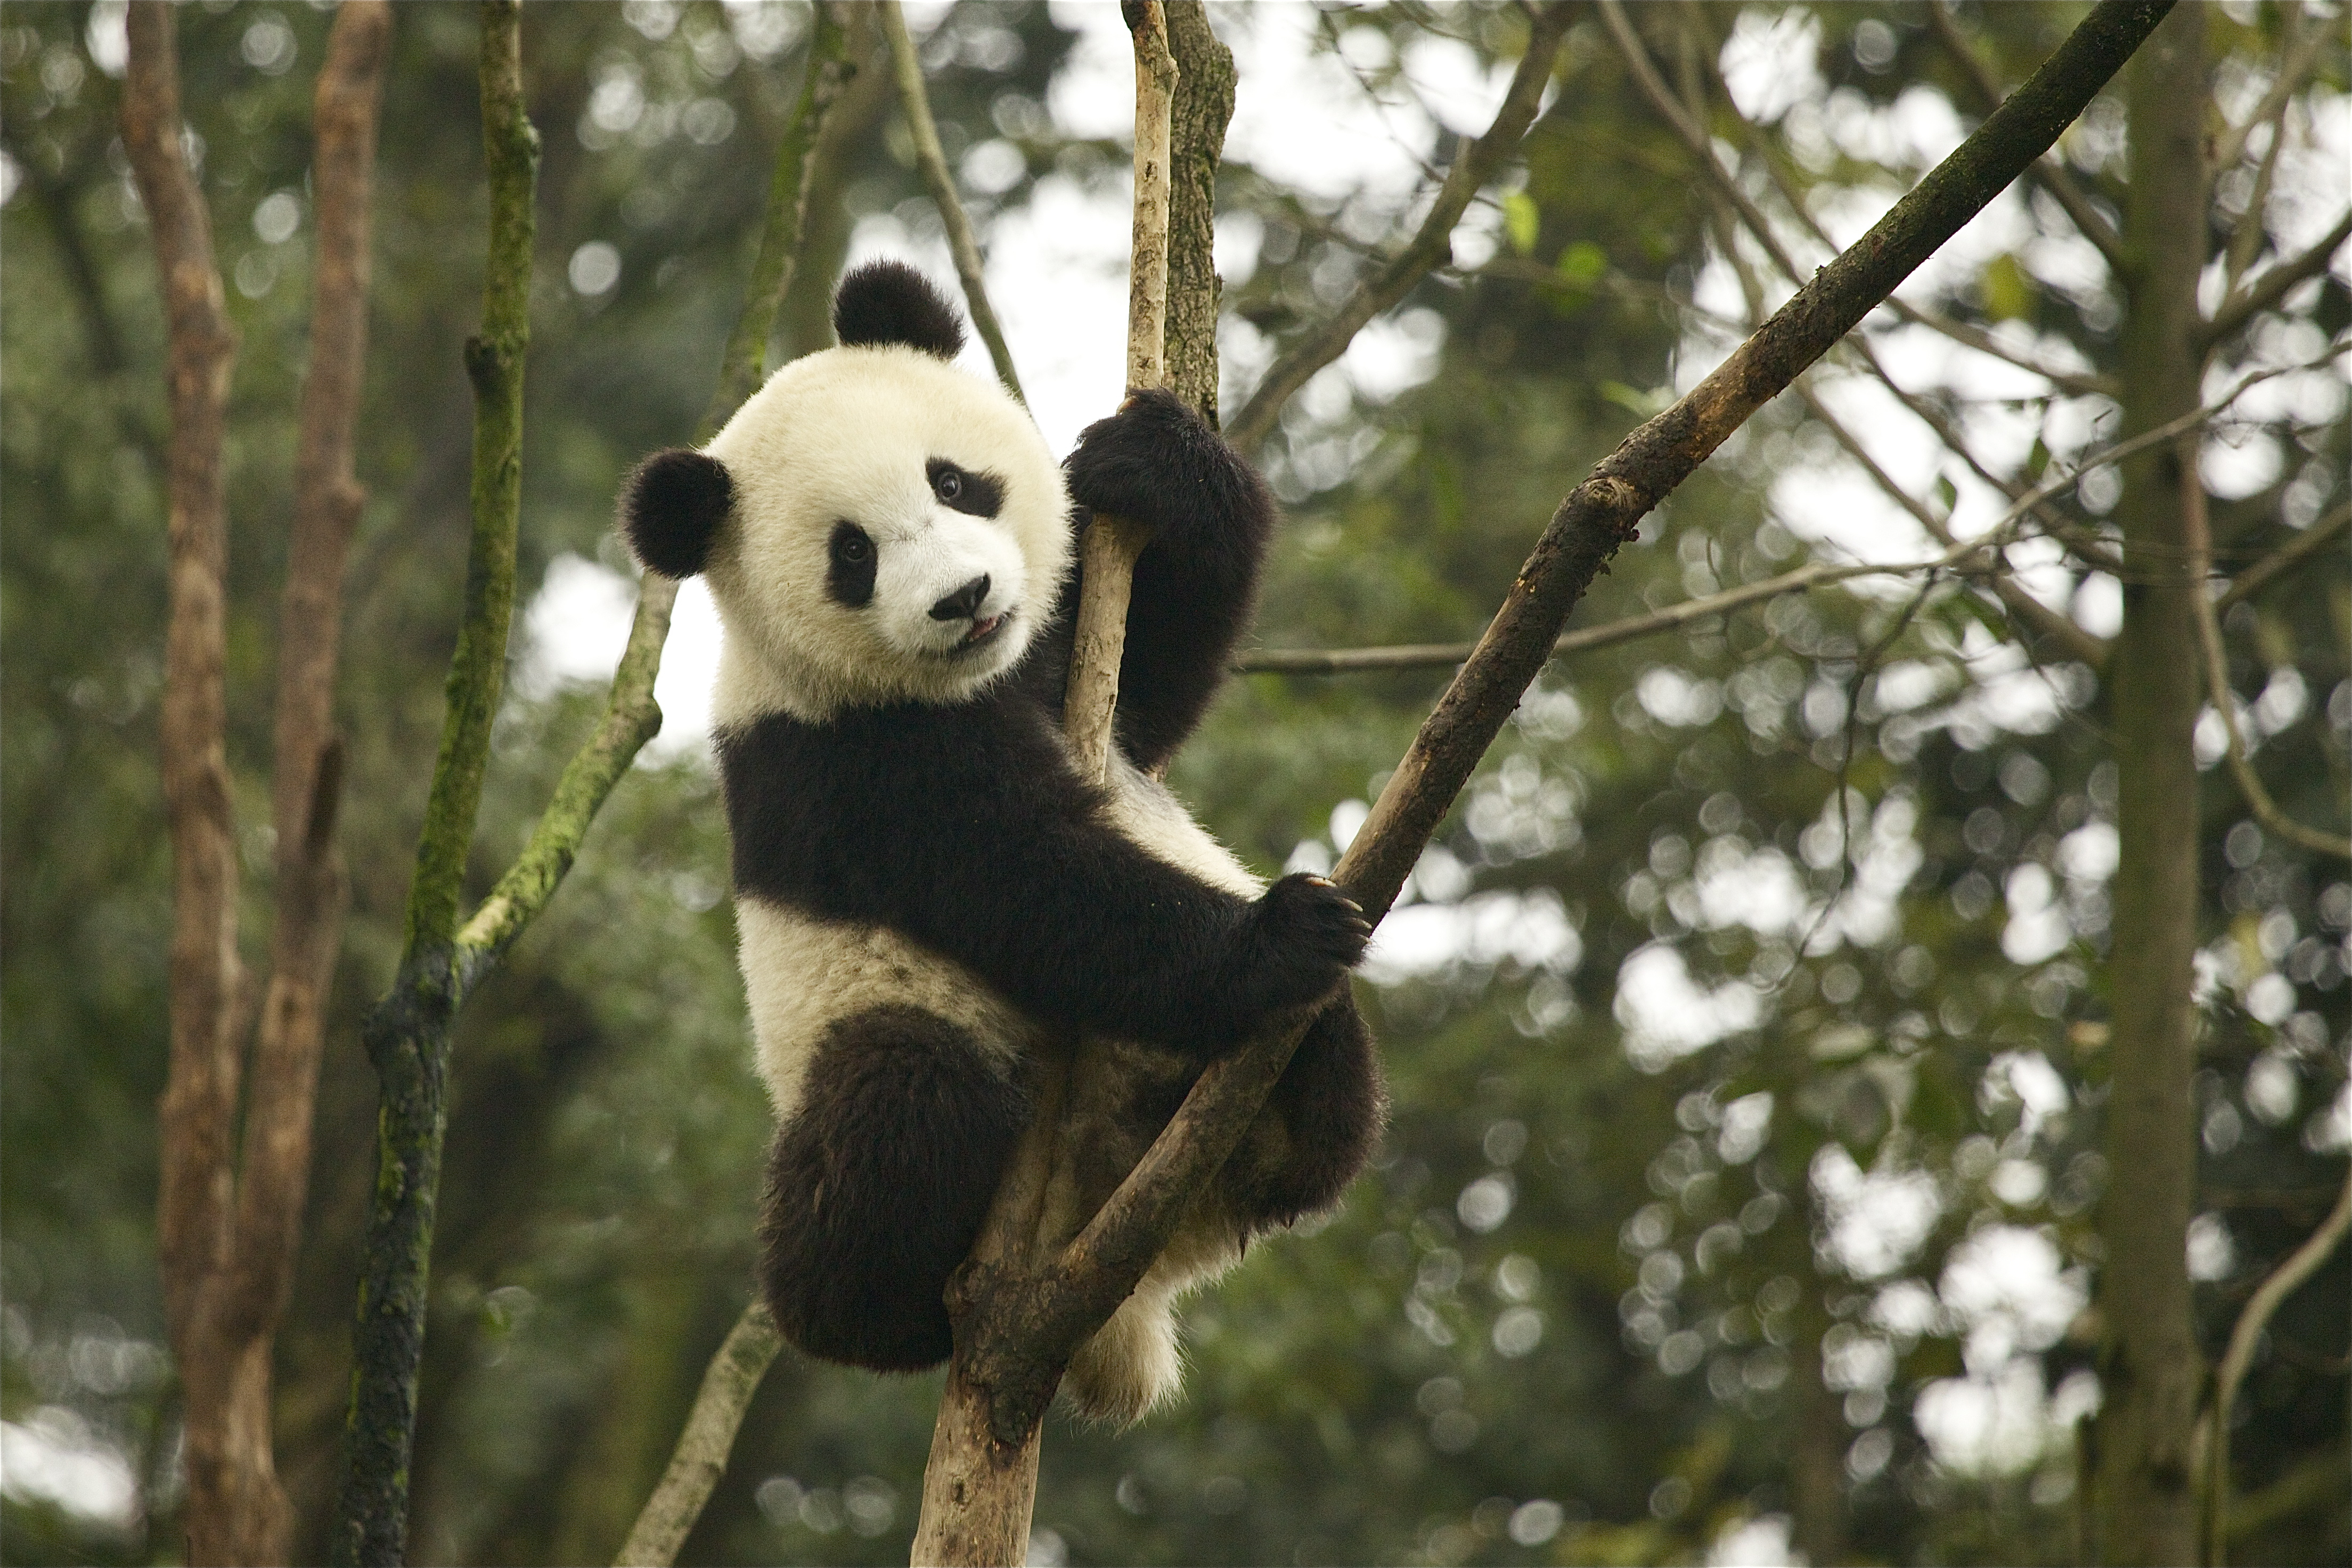 Panda No Longer ‘Endangered’ in IUCN Red List Update